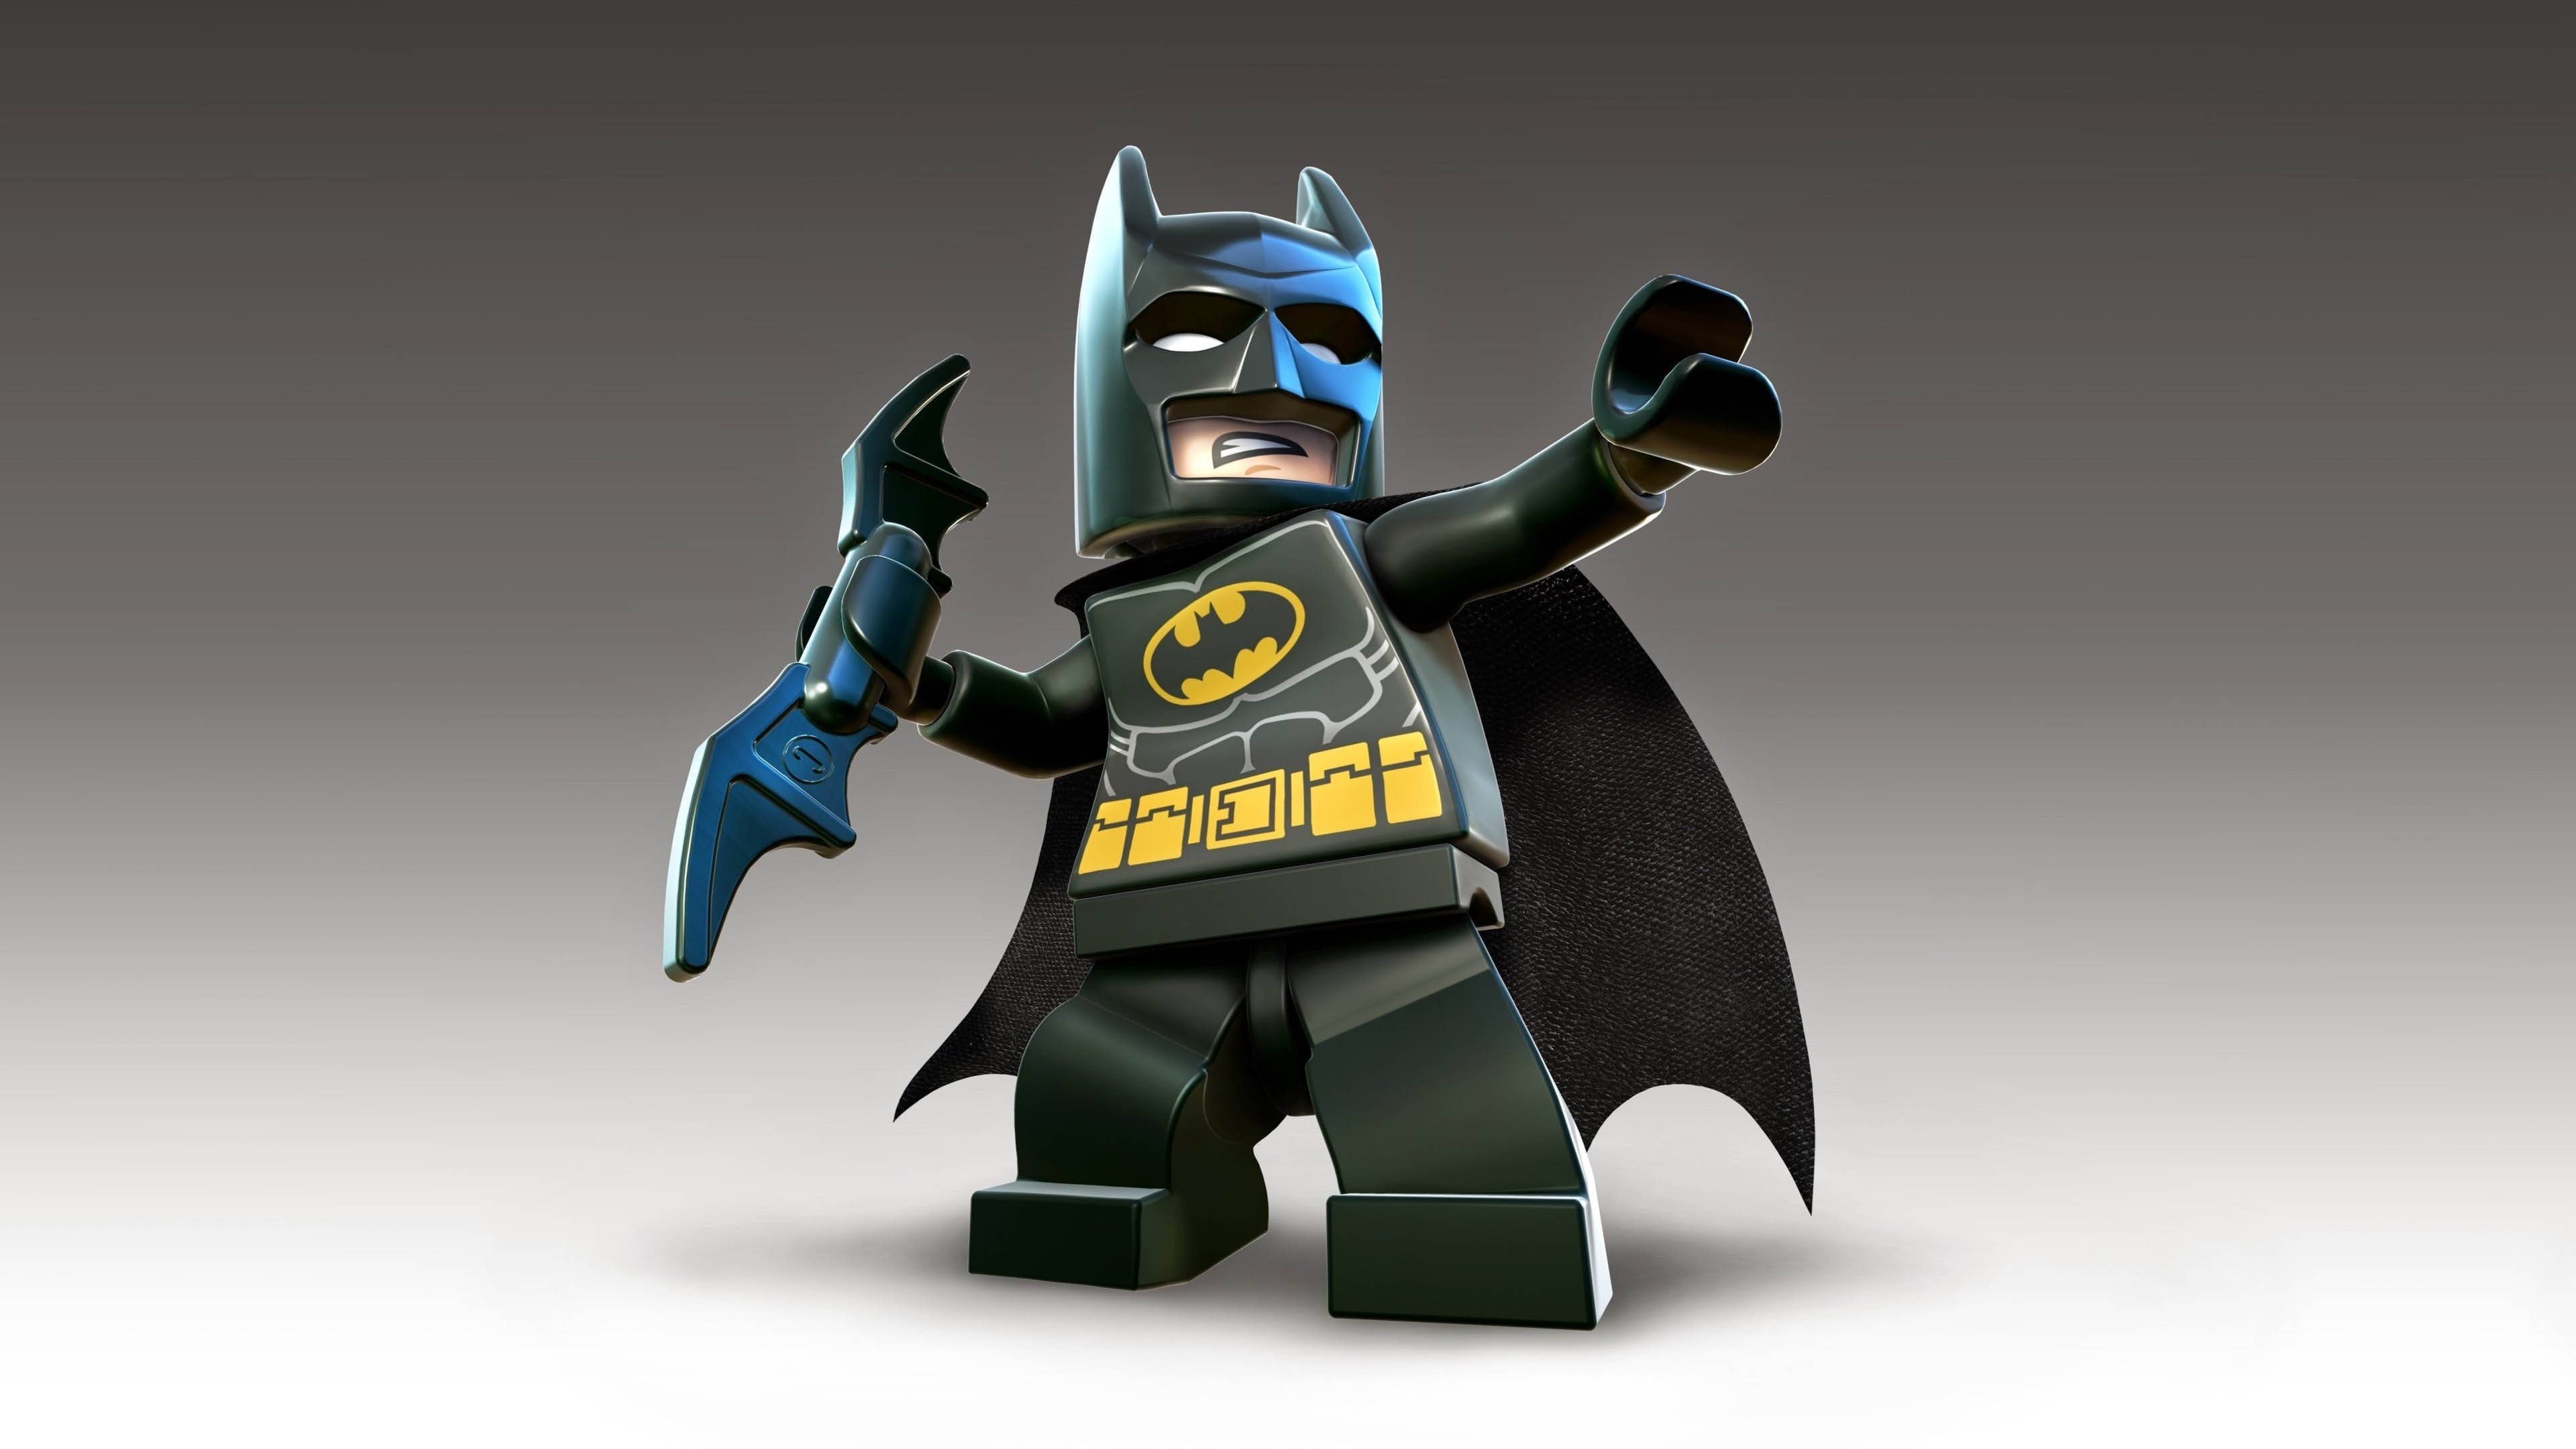 3840x2160 Batman Throwing Batarang Lego Batman Movie Wallpaper - Image #4163 -